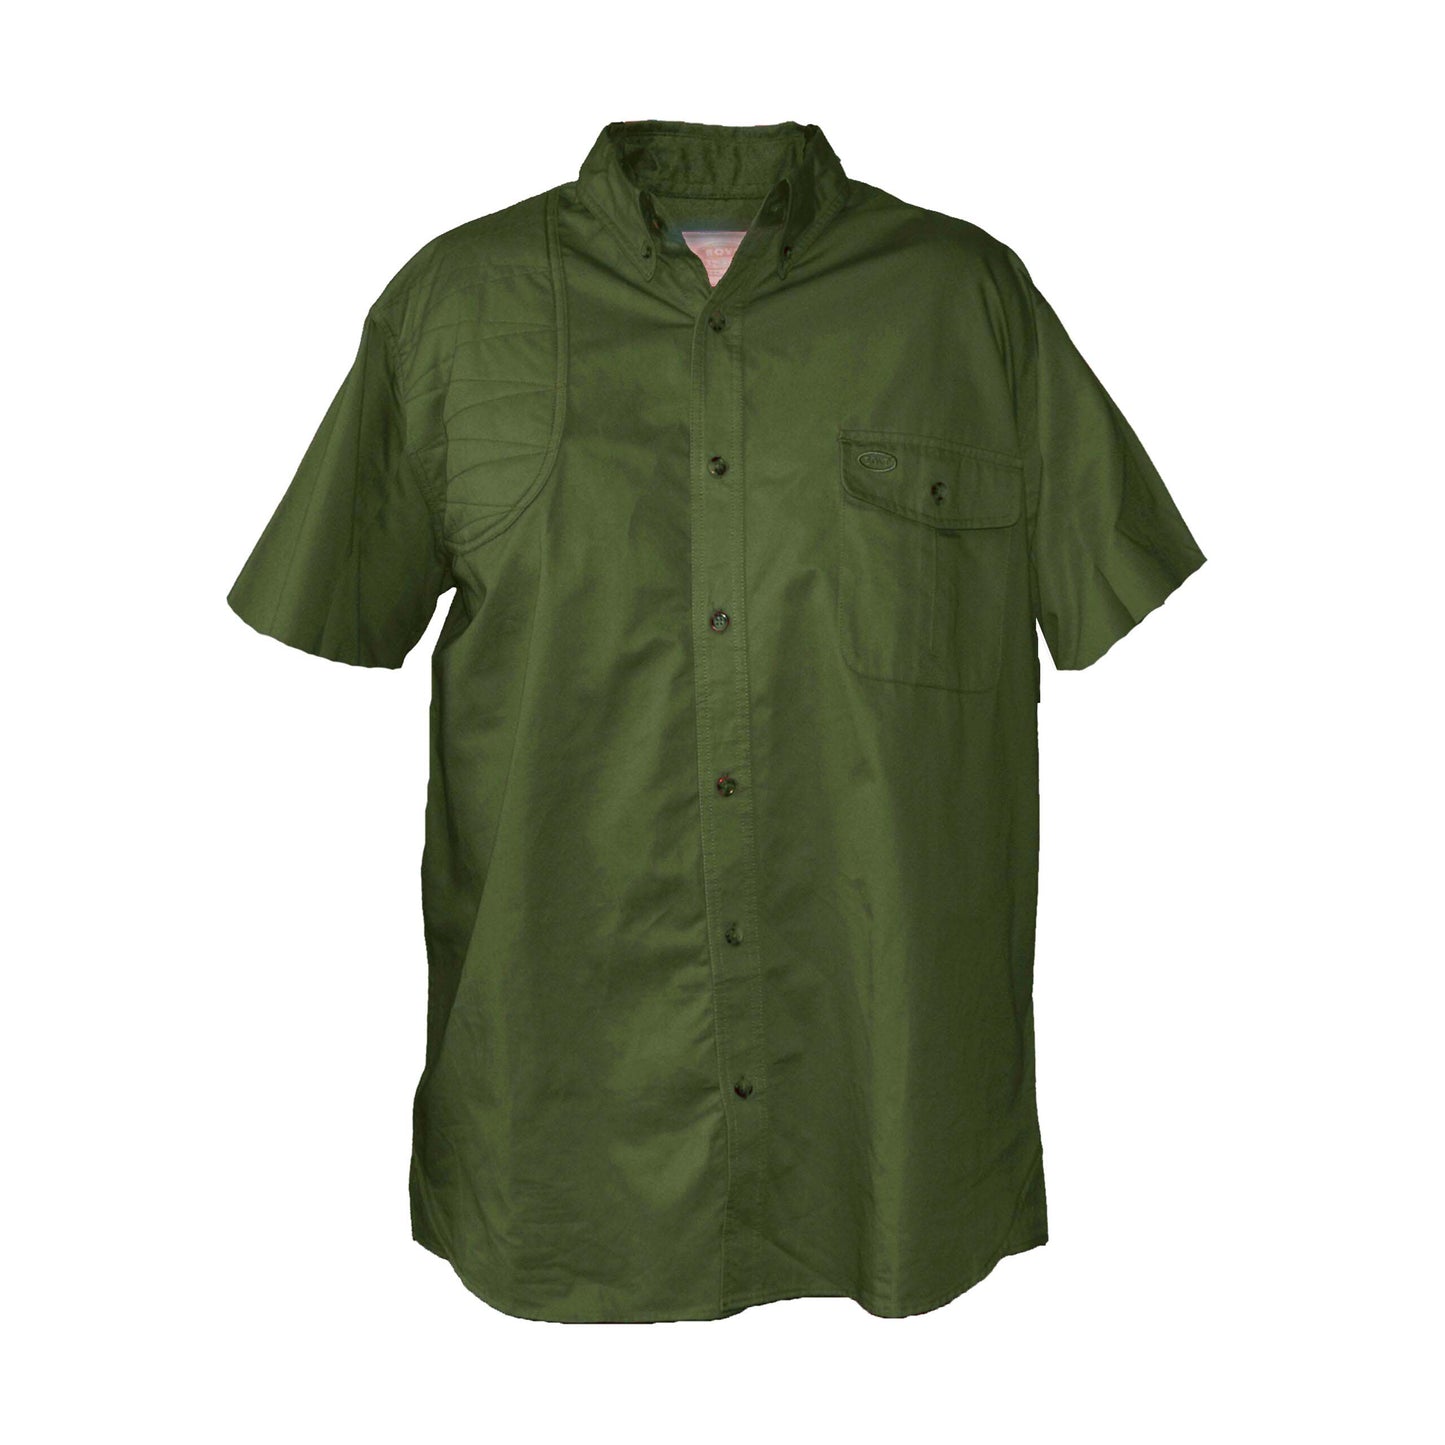 Boyt Harness Company Upland Scout Short Sleeve Shirt